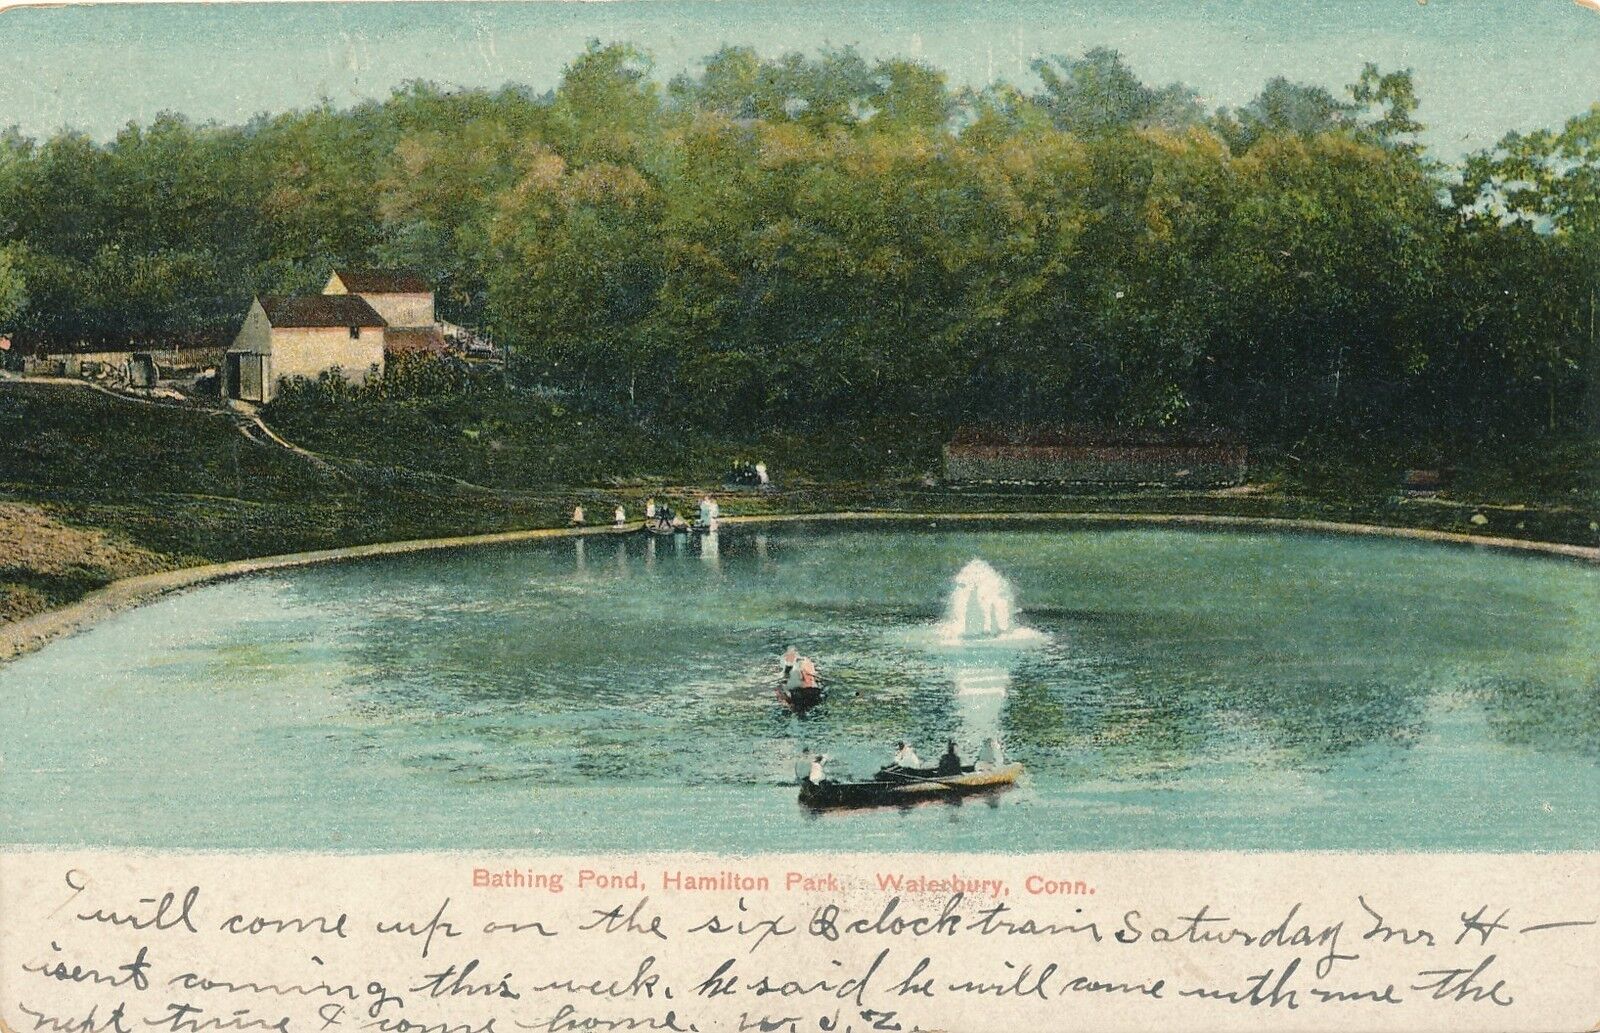 WATERBURY CT – Hamilton Park Bathing Pond – udb – mailed 1908